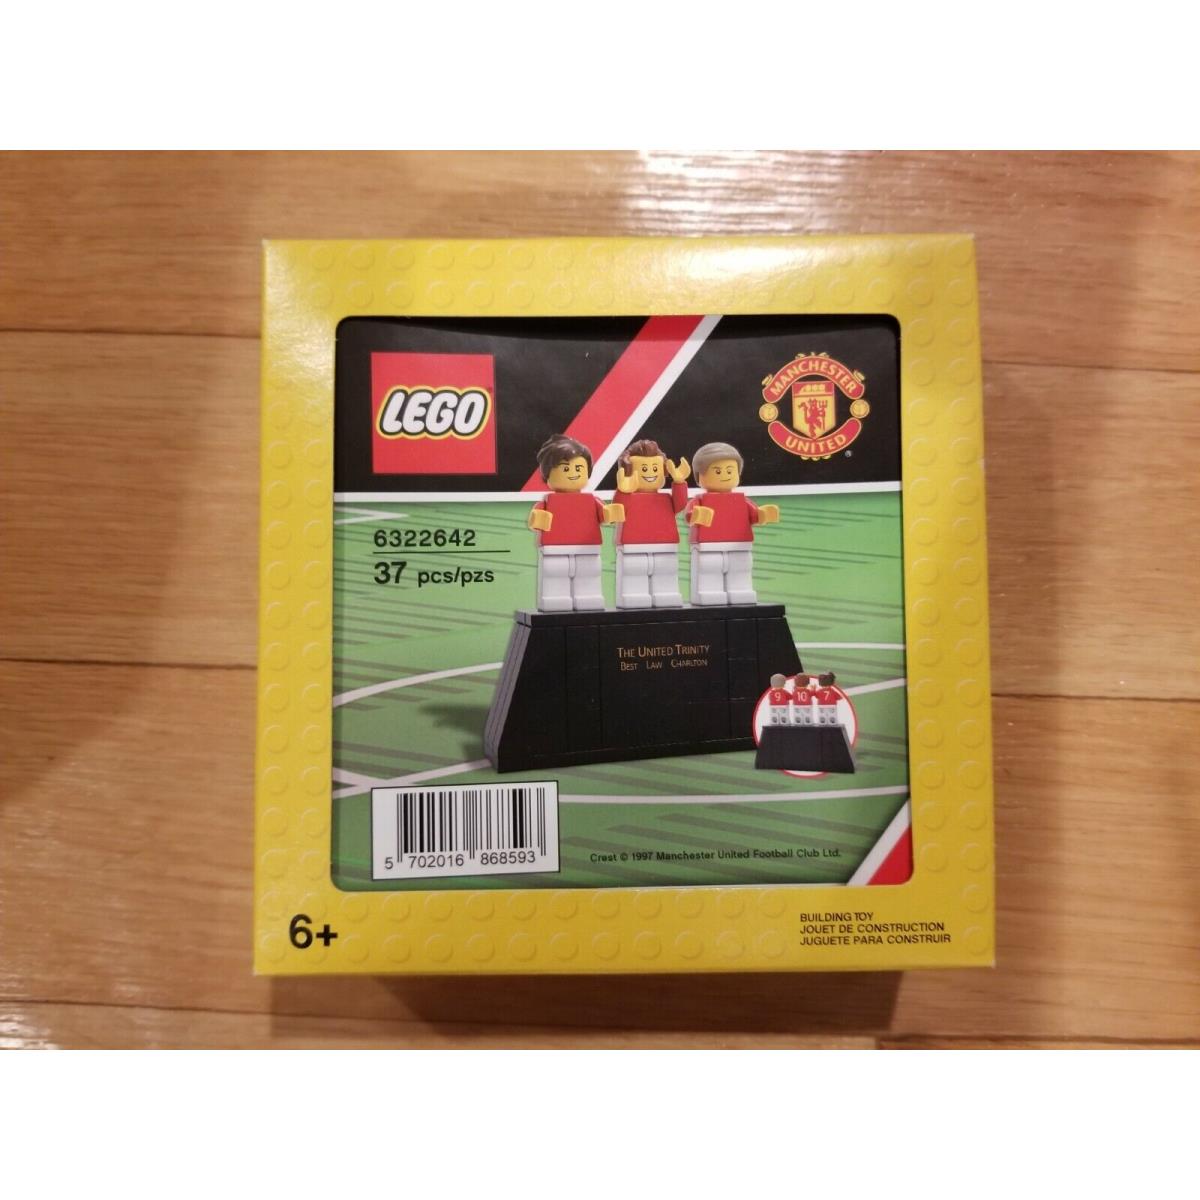 Lego 6322642 The United Trinity - Manchester United